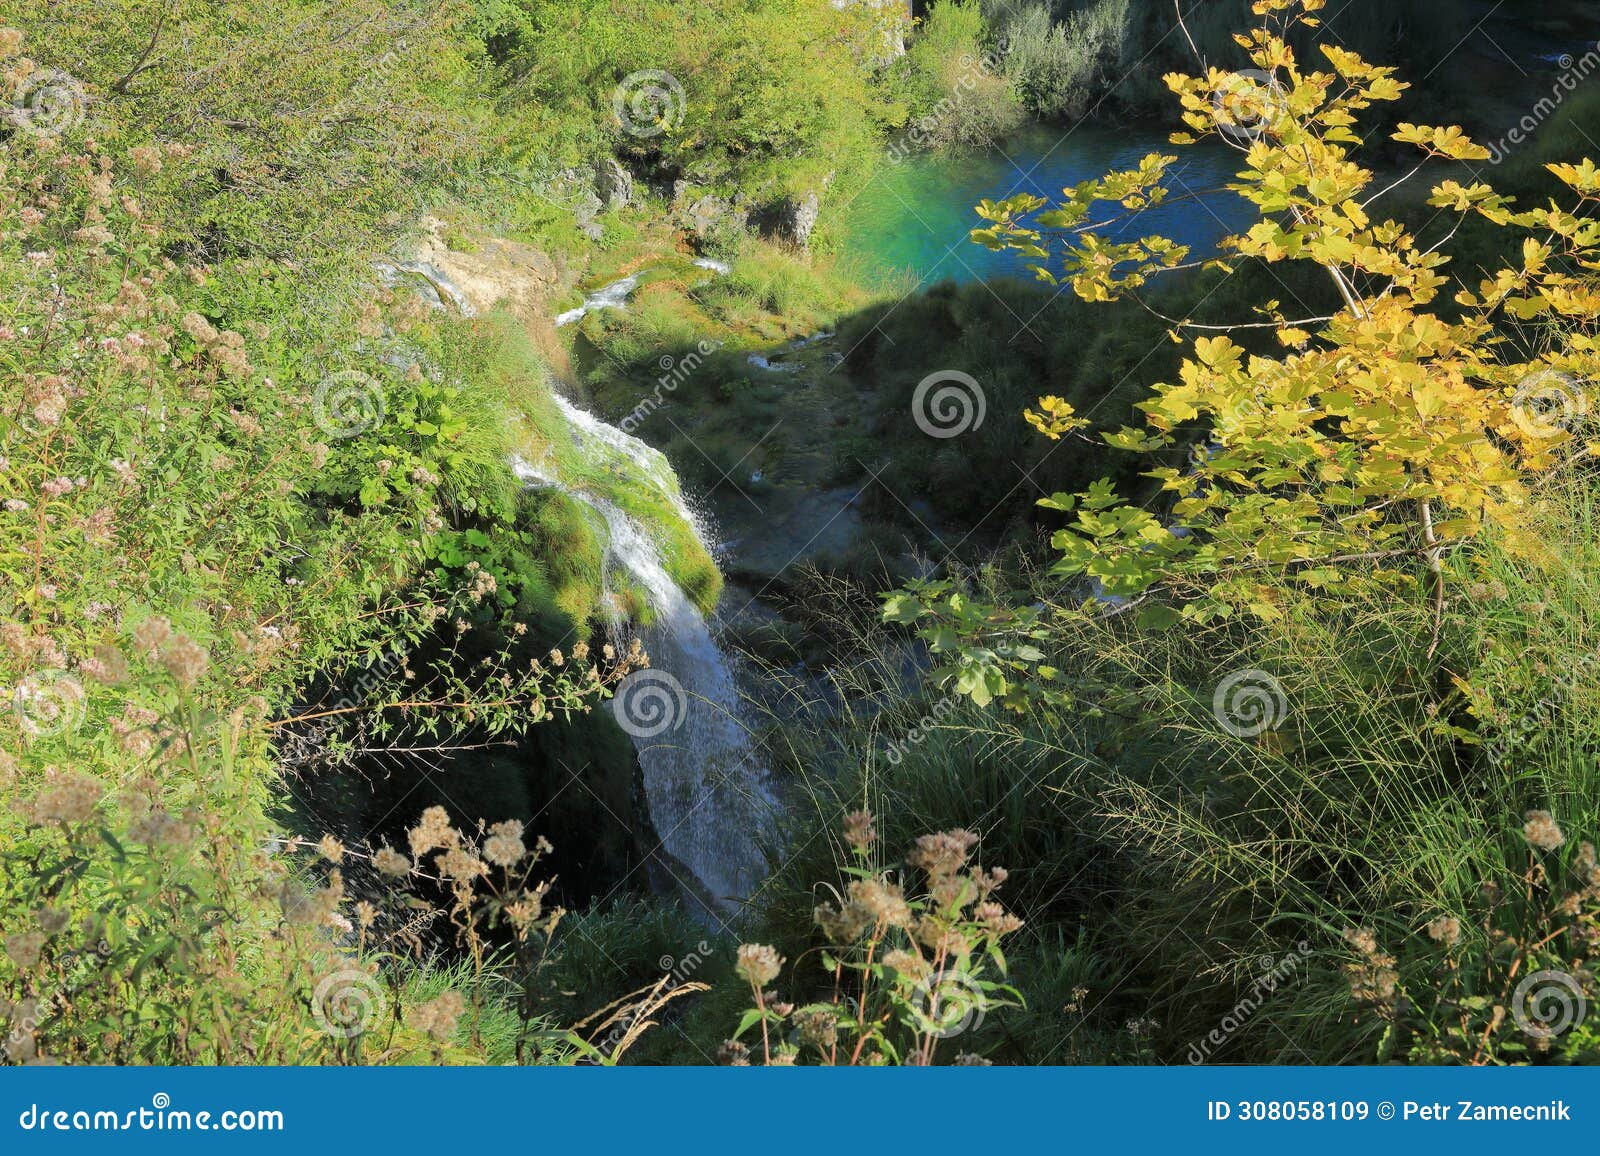 waterfall and lake on plitvicka jezera in croatia